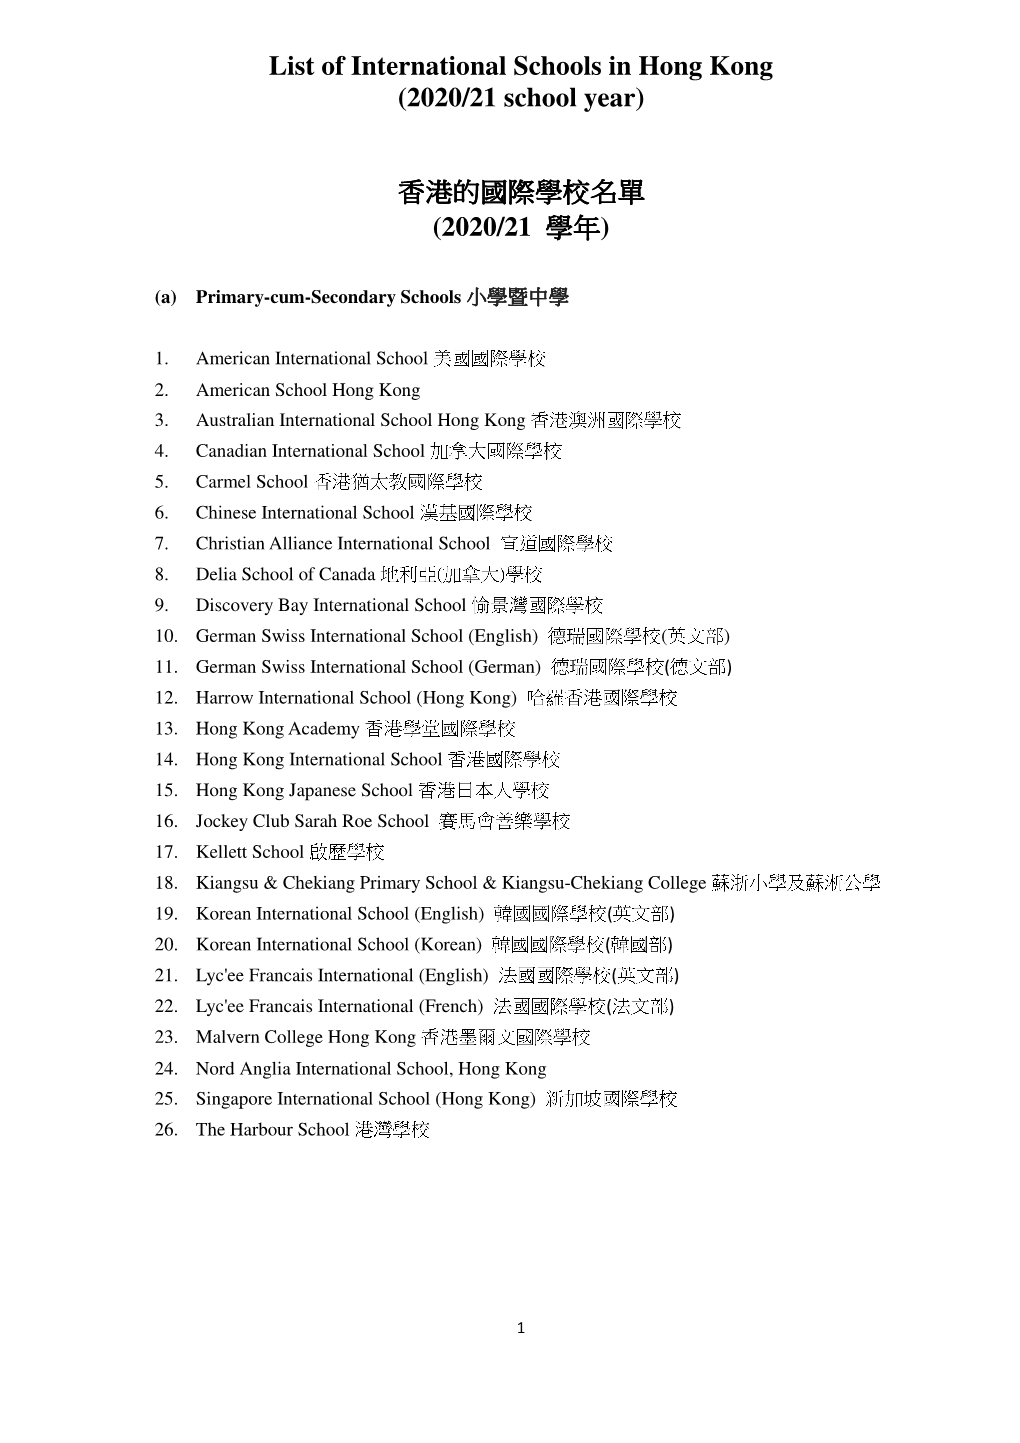 List of International Schools in Hong Kong (2020/21 School Year) 香港的國際學校名單(2020/21